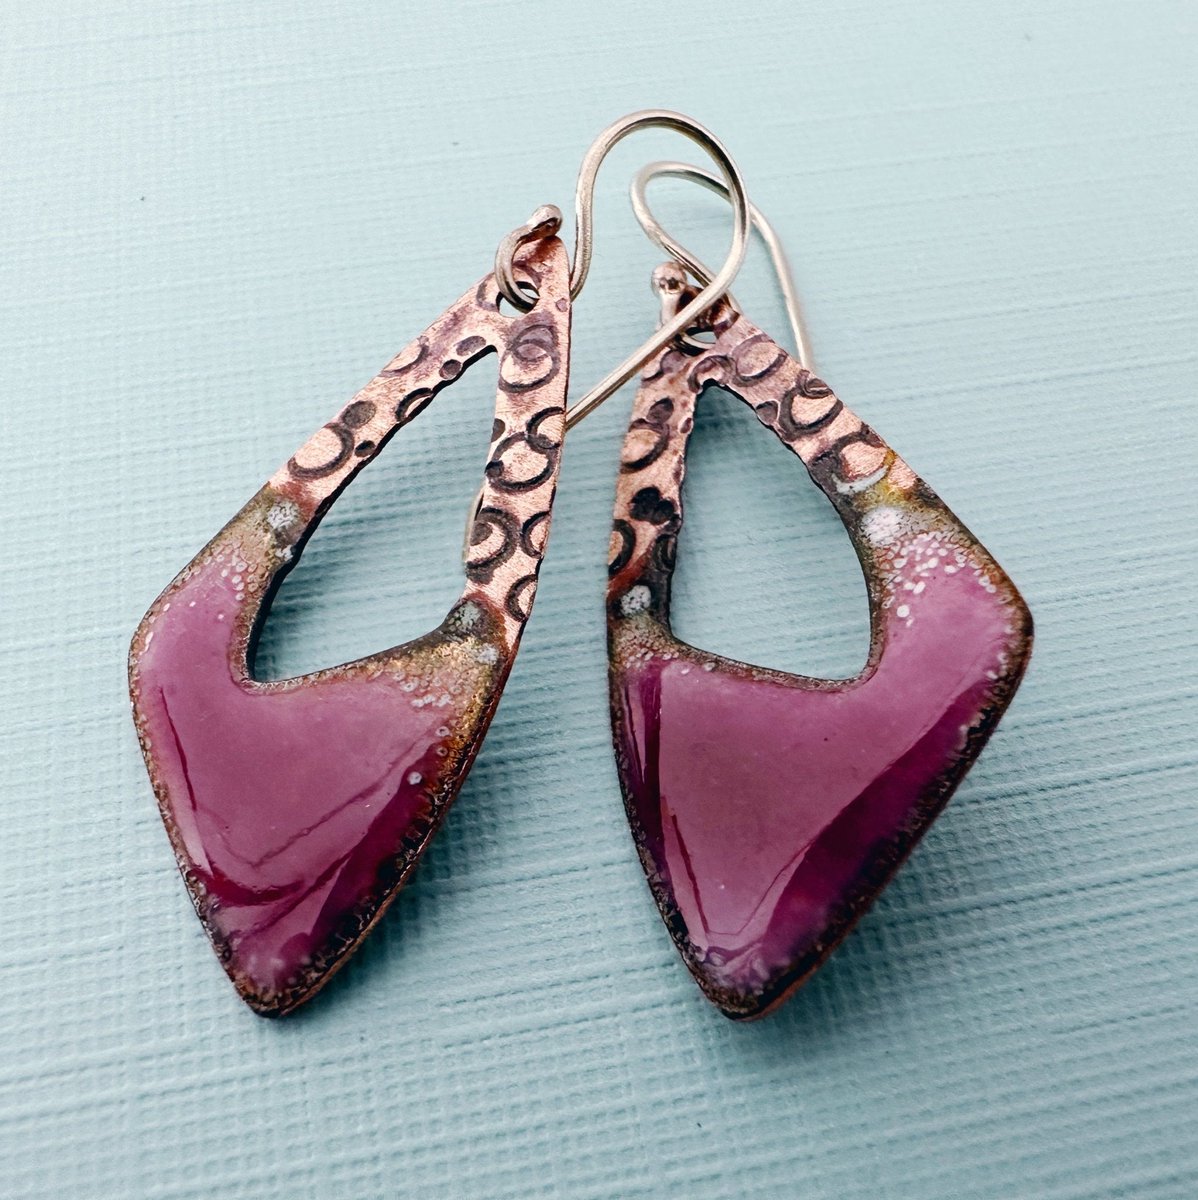 Irregular Triangle Earrings - Raspberry tuppu.net/3211be5f ##UKGiftHour #bizbubble #HandmadeHour #giftideas #MHHSBD #inbizhour #UKHashtags #shopsmall #CopperEarrings